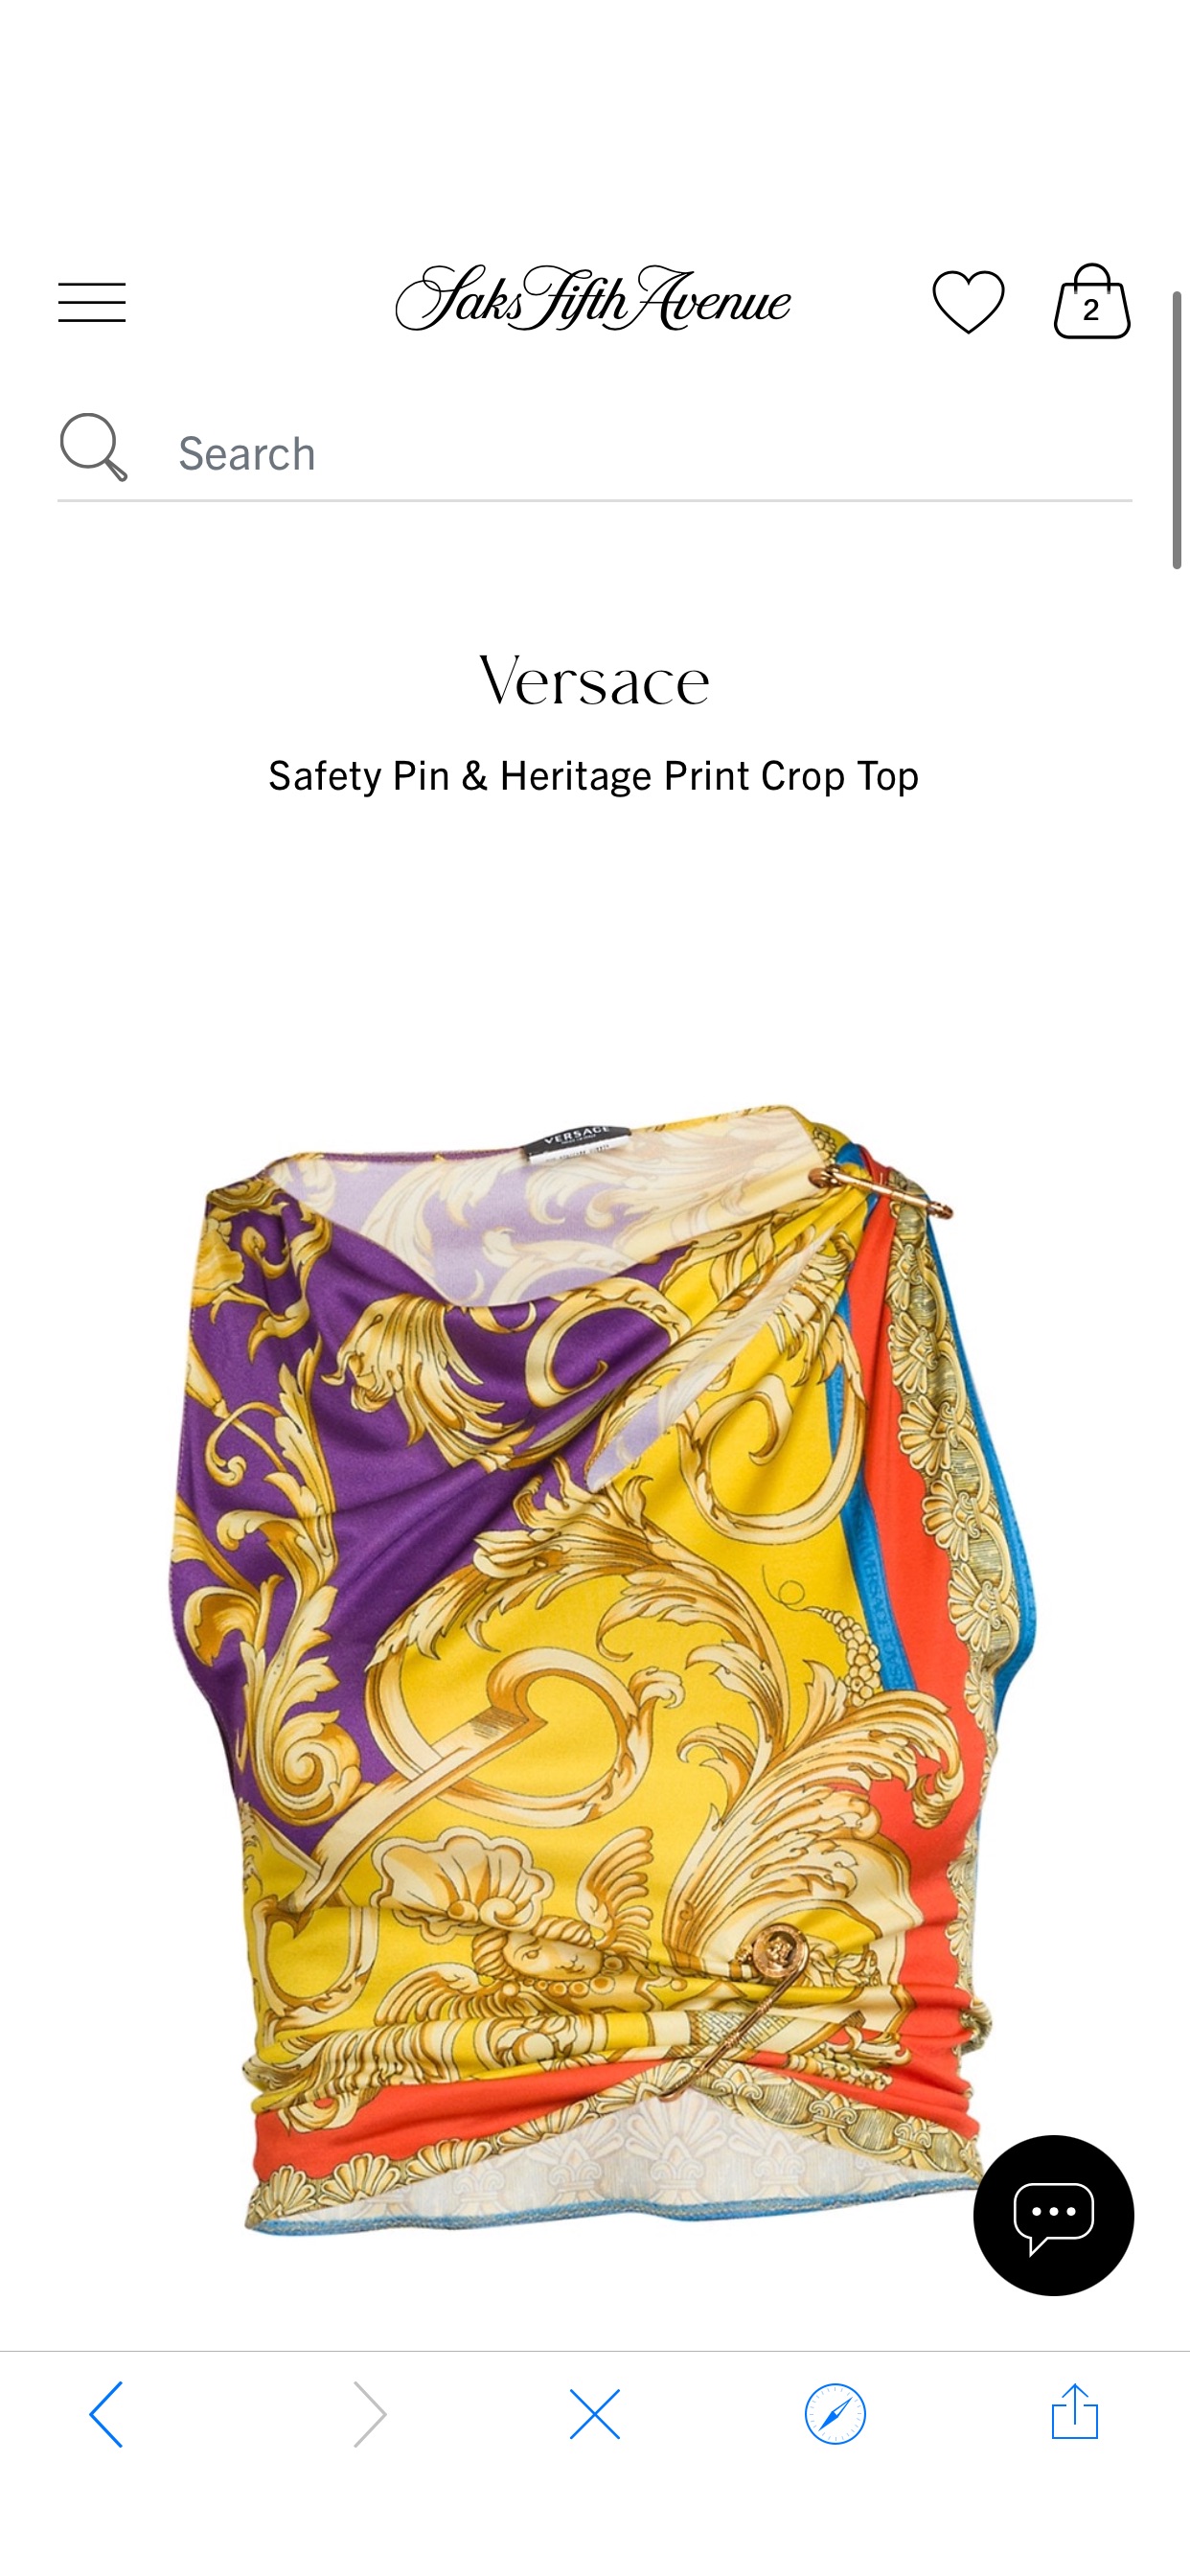 Shop Versace Safety Pin & Heritage Print Crop Top | Saks Fifth Avenue
上衣